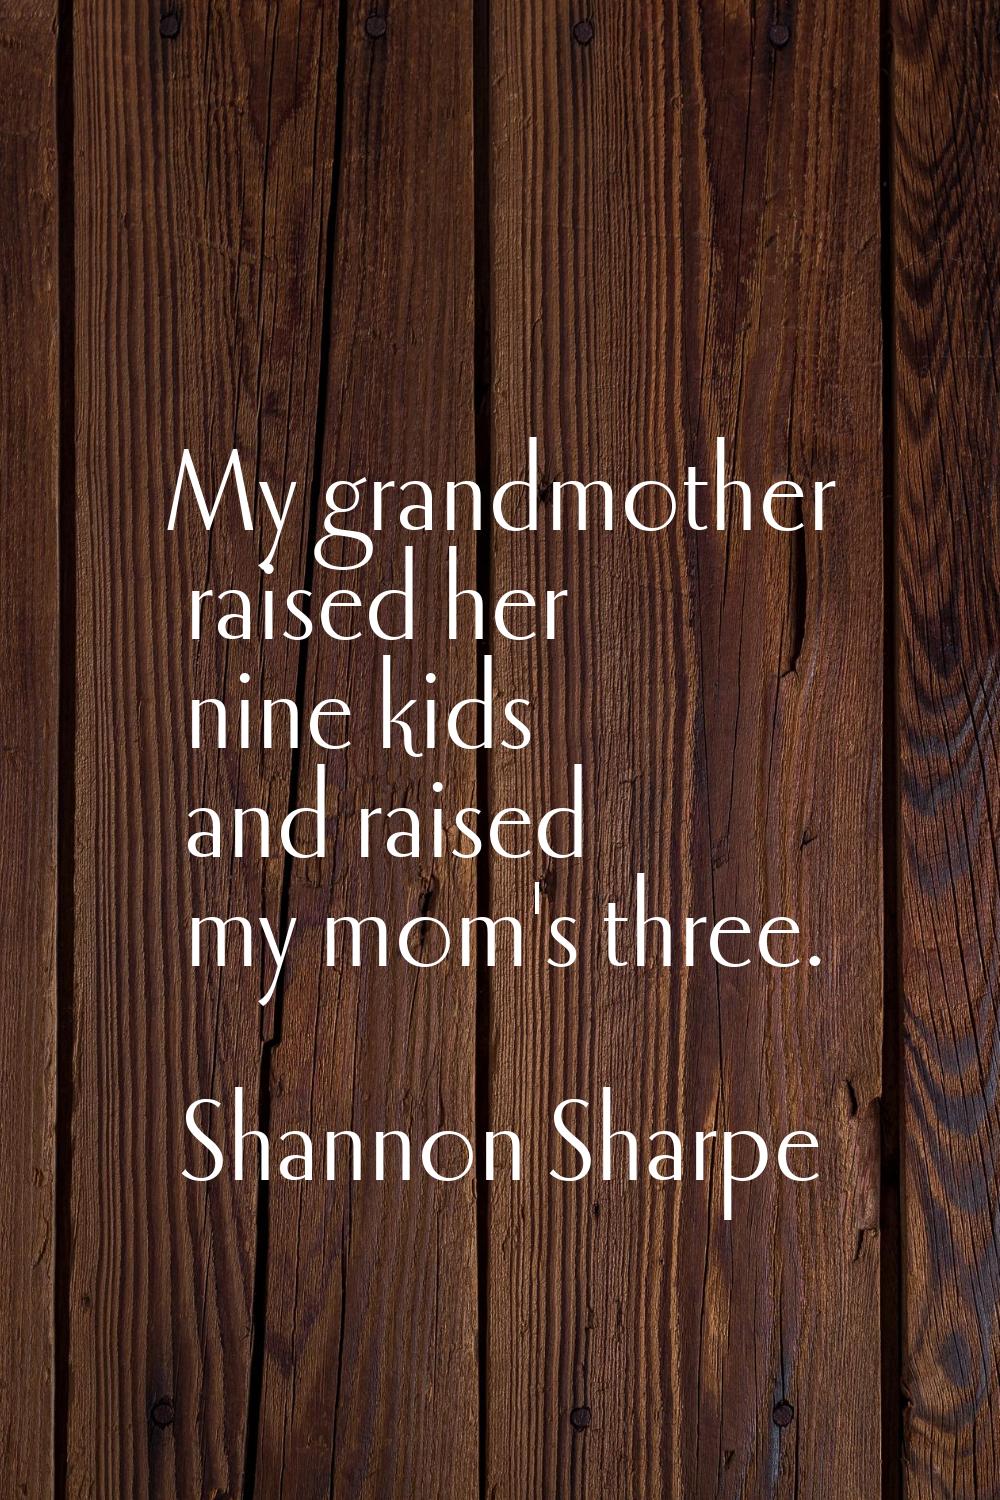 My grandmother raised her nine kids and raised my mom's three.